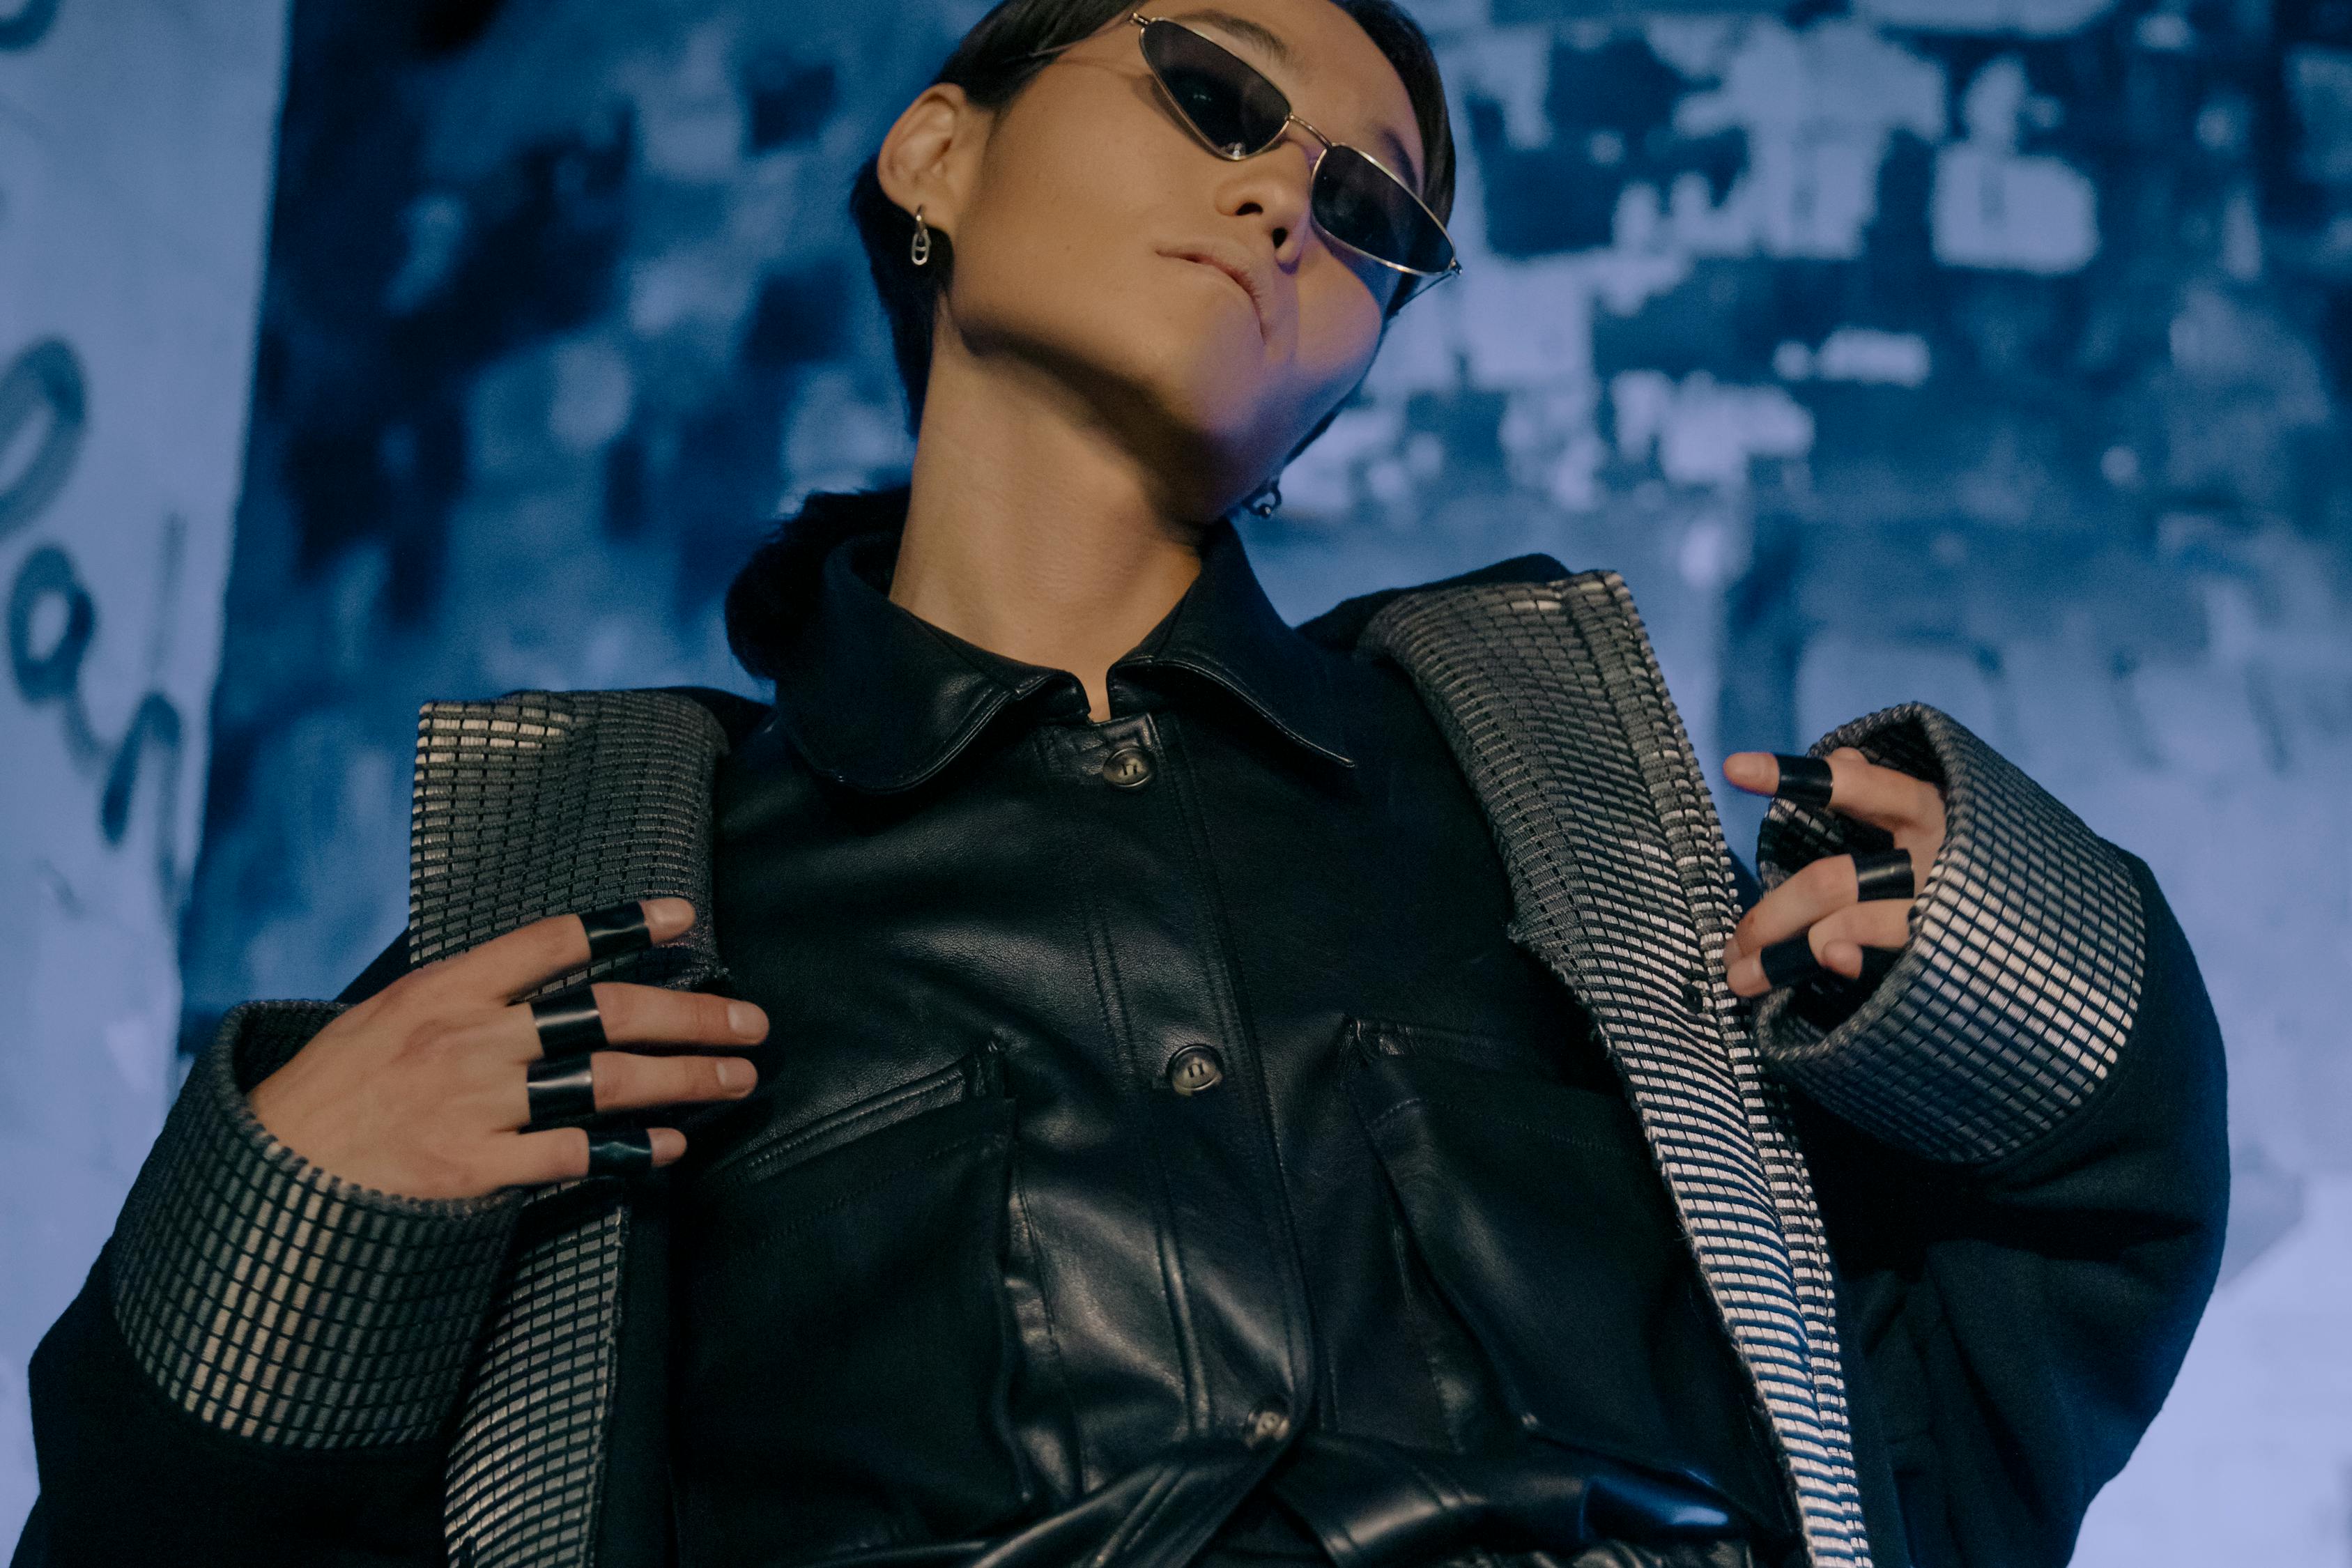 Man in Black Leather Jacket Wearing Black Sunglasses · Free Stock Photo